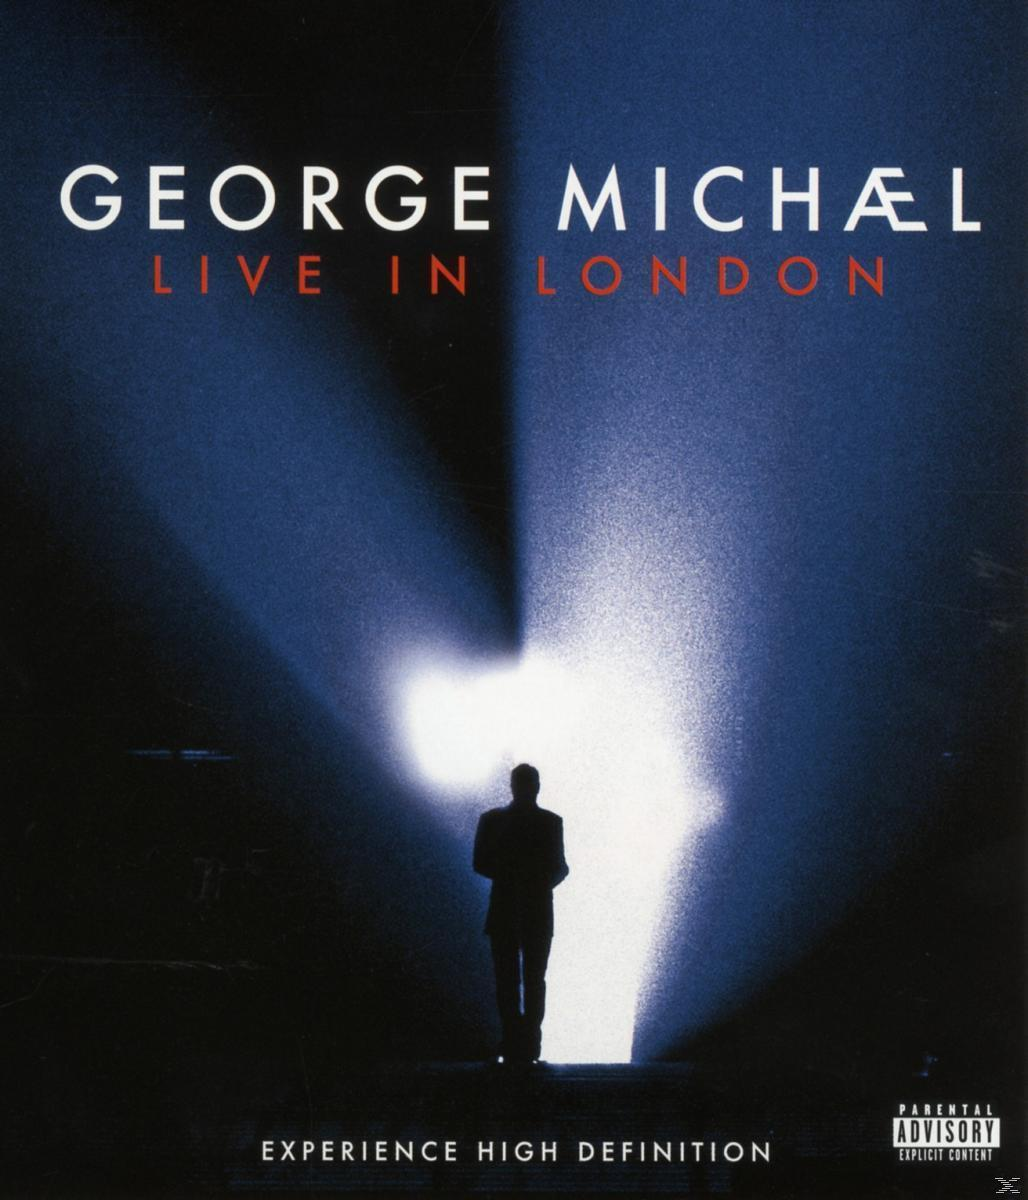 George Michael - George Michael Live - London (Blu-ray) - In